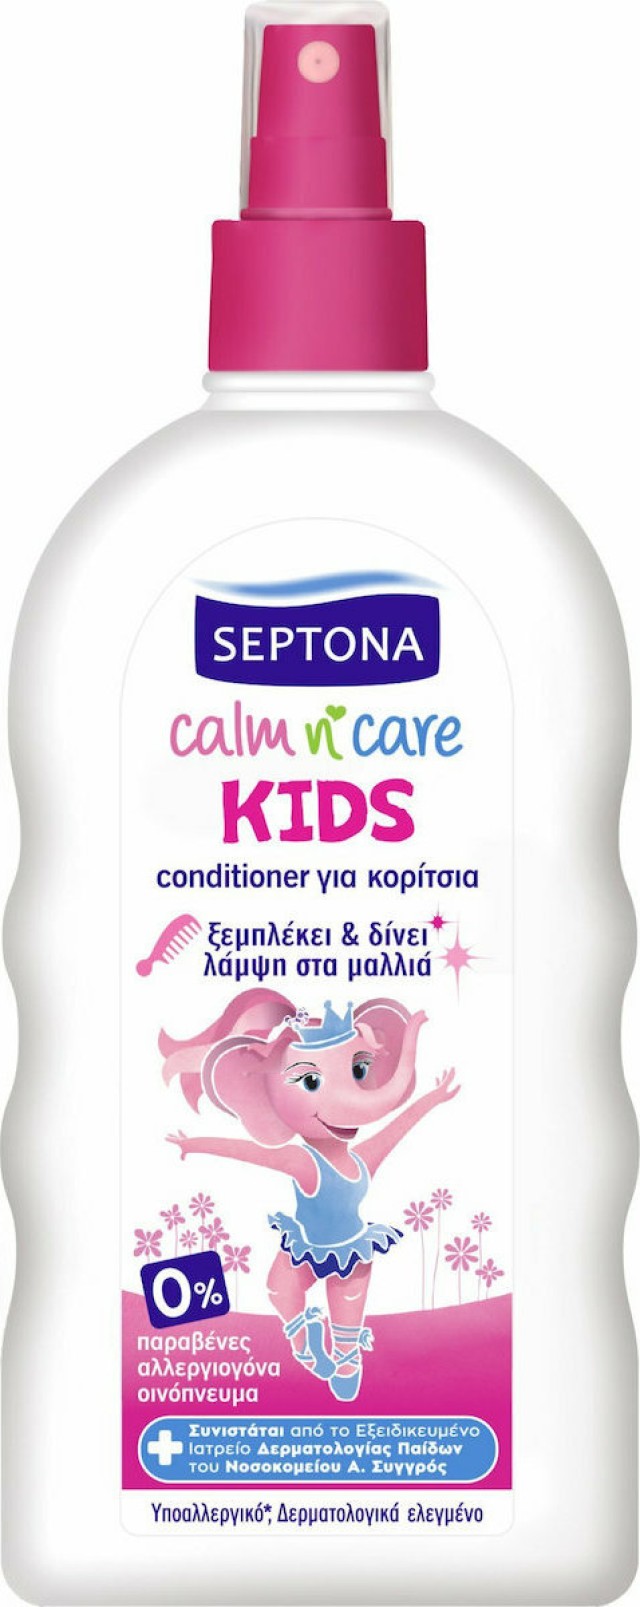 Septona Calm n Care Kids Παιδικό Conditioner Για Κορίτσια 200ml